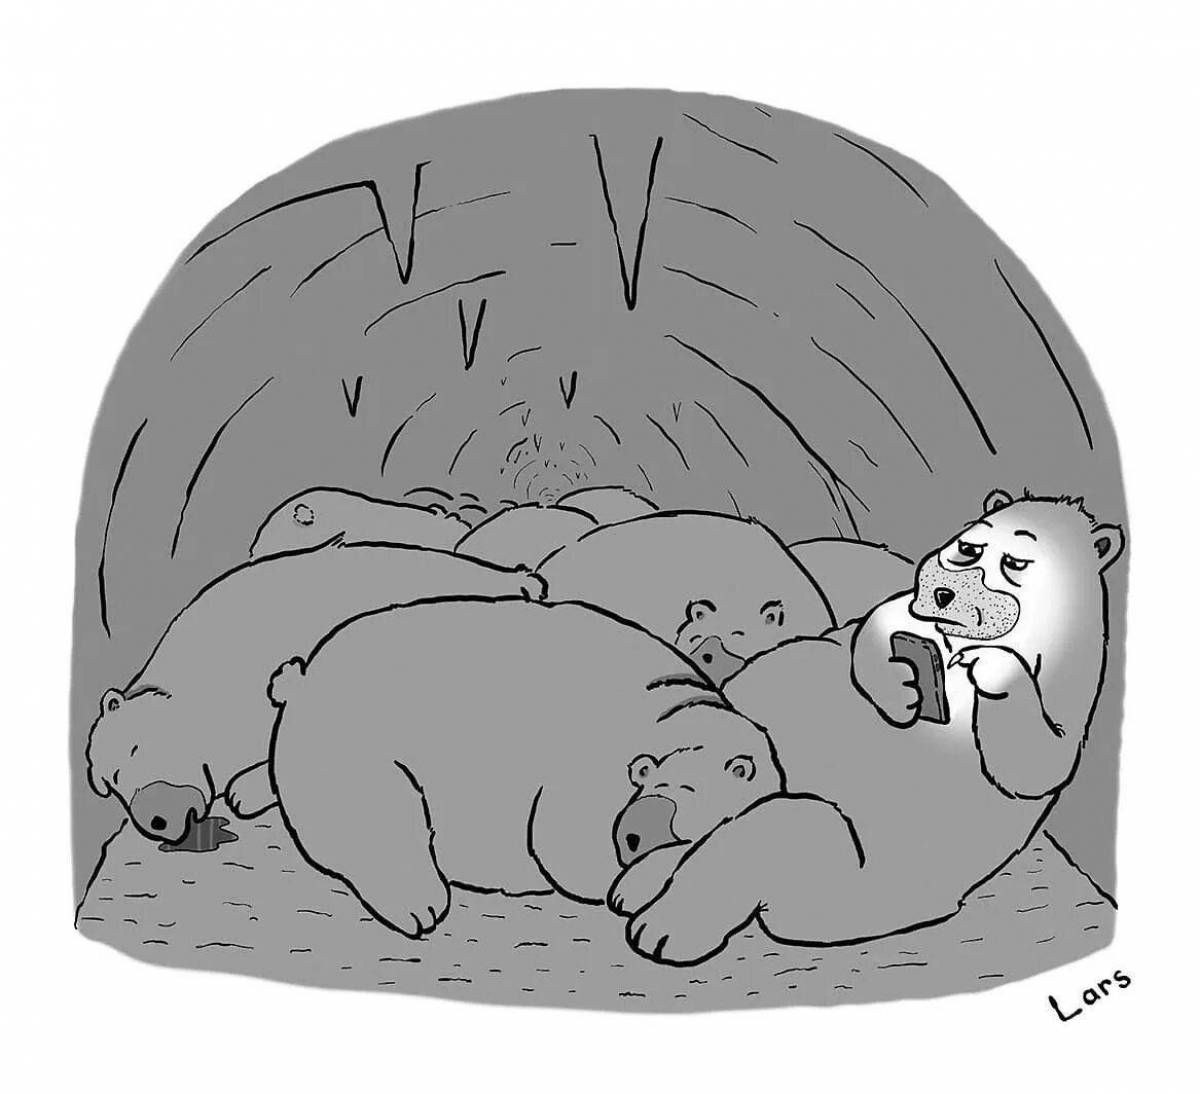 Majestic bear in a den drawing